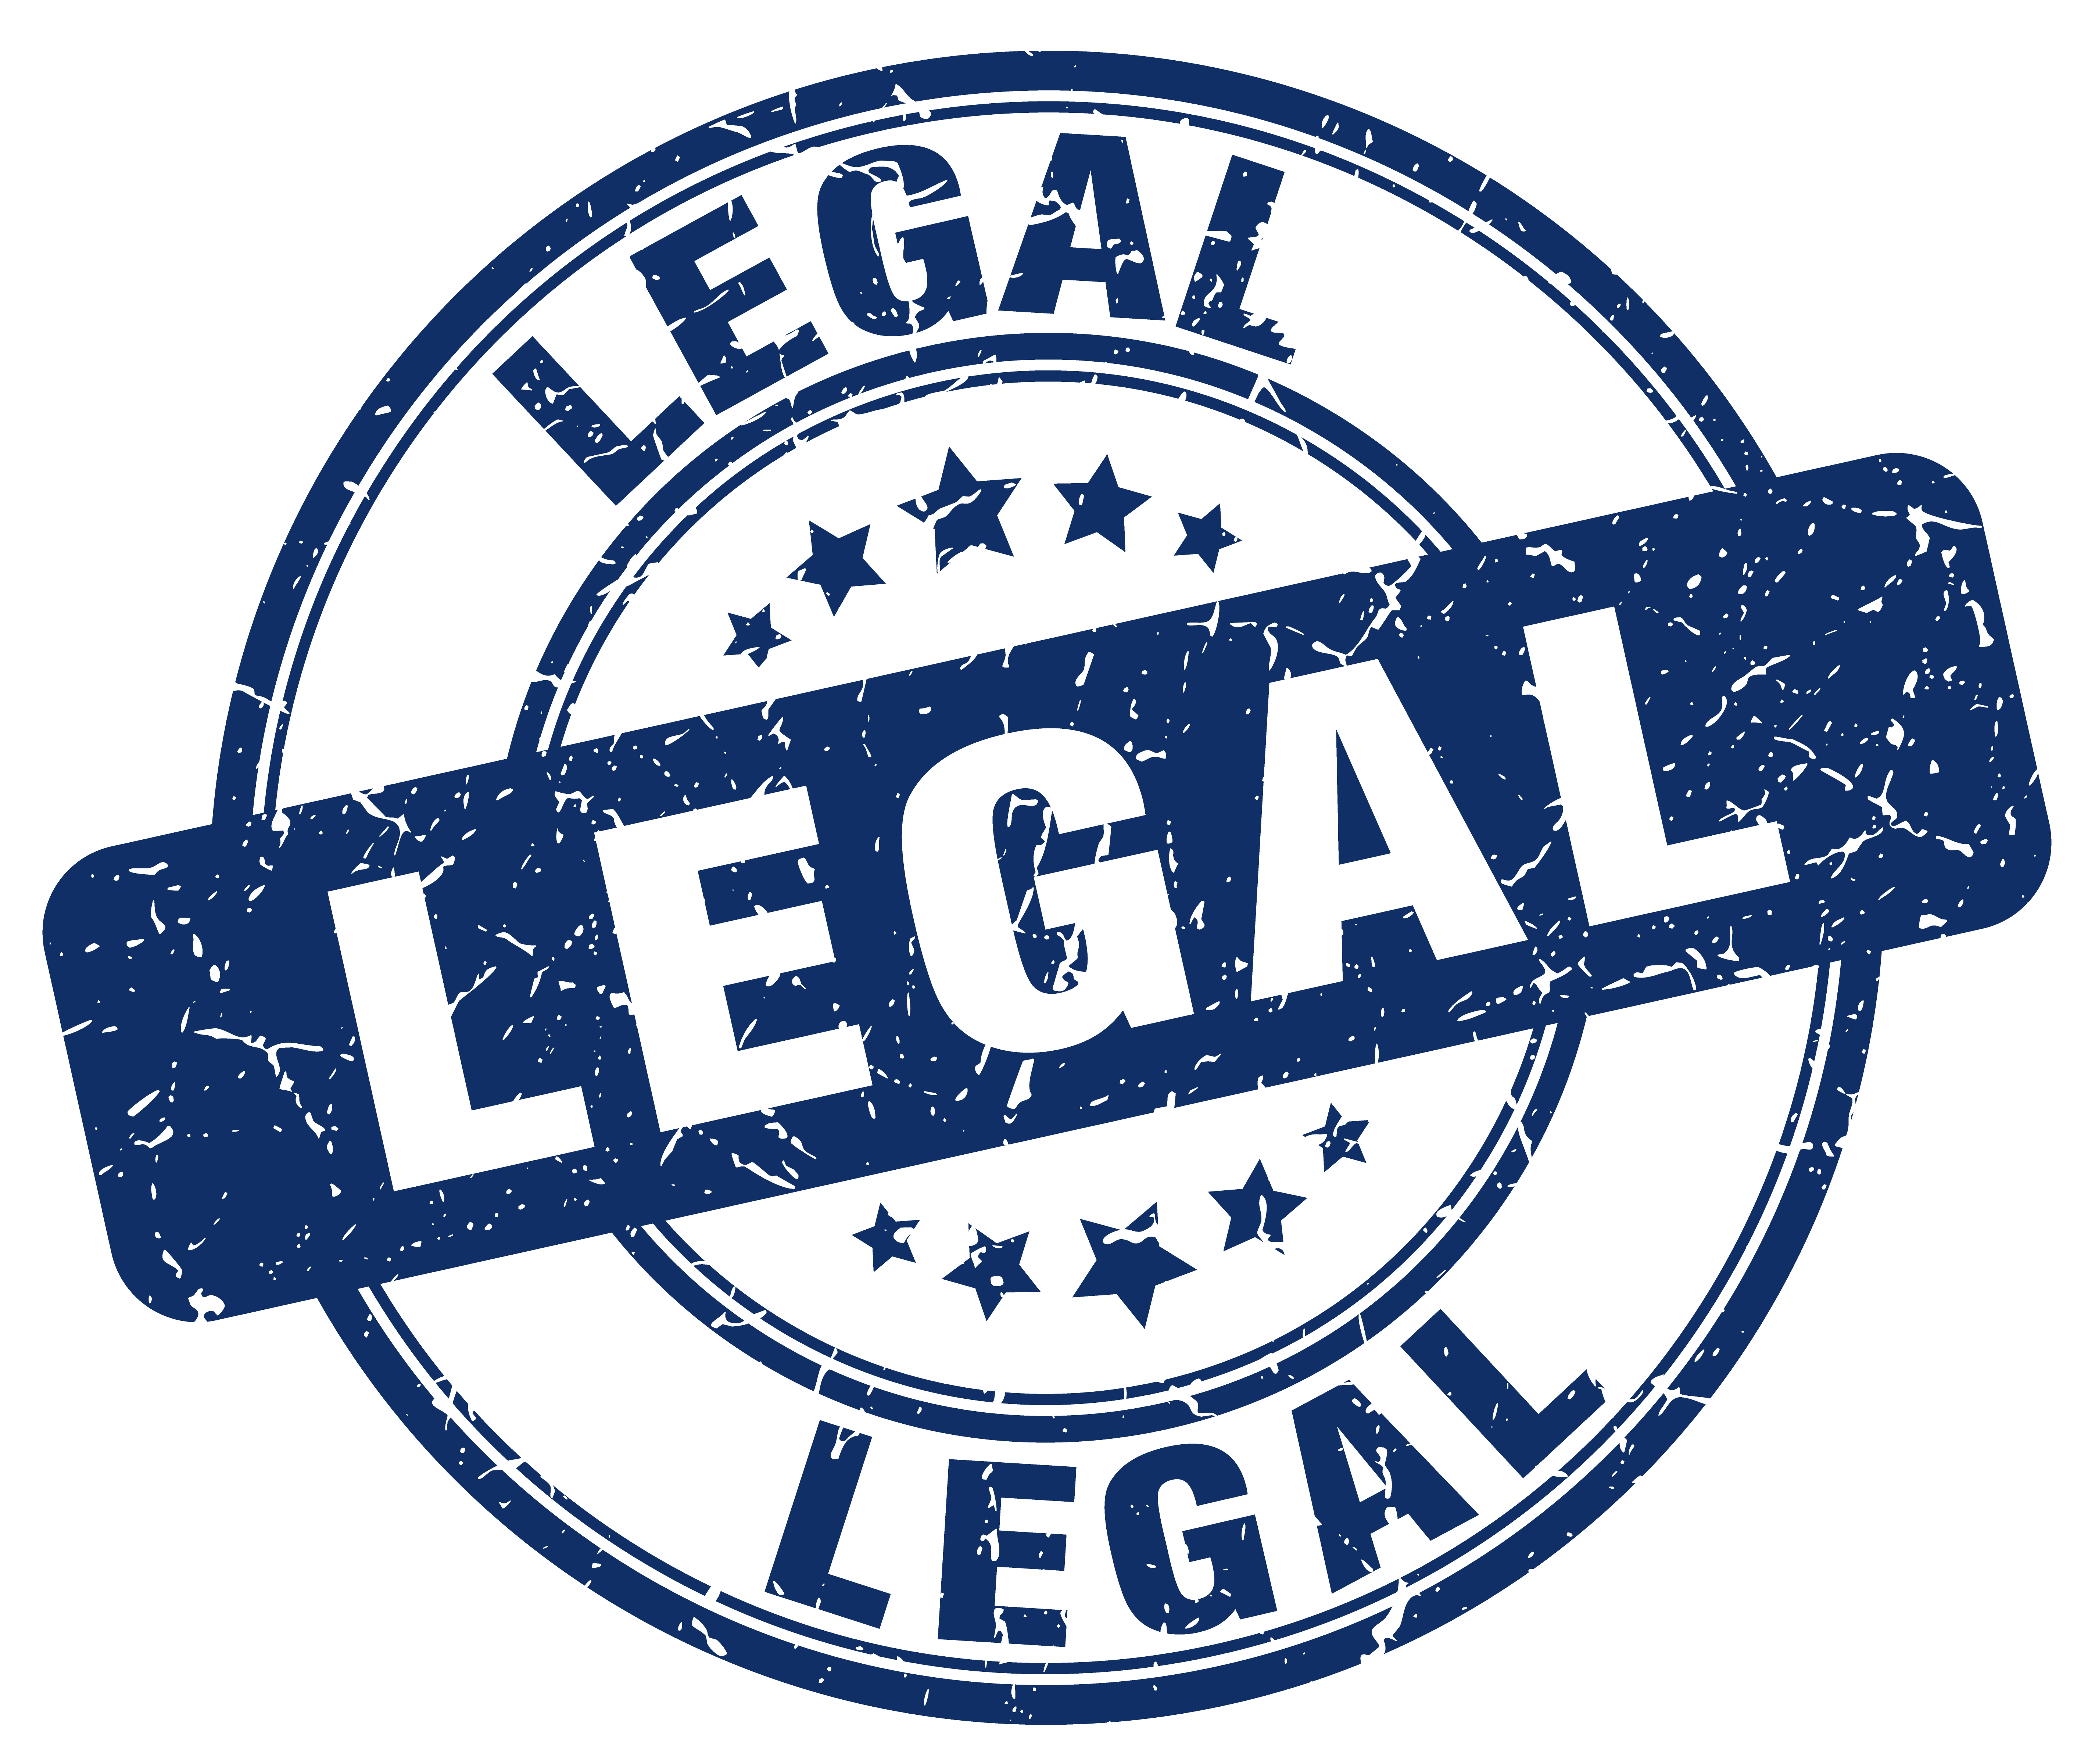 Legal translation company certified